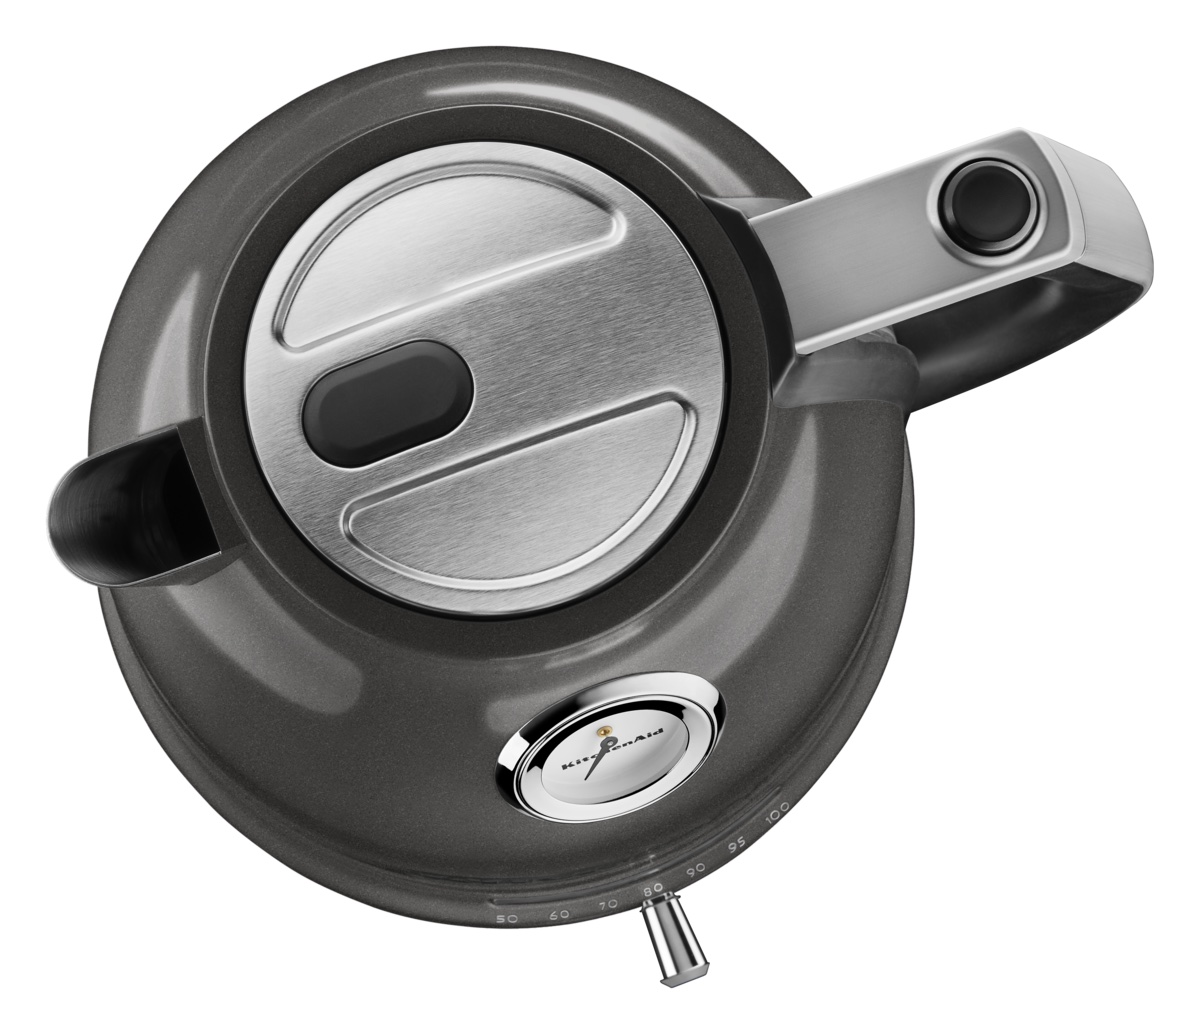 KitchenAid Artisan Wasserkocher - Toaster Set Medallion Silber